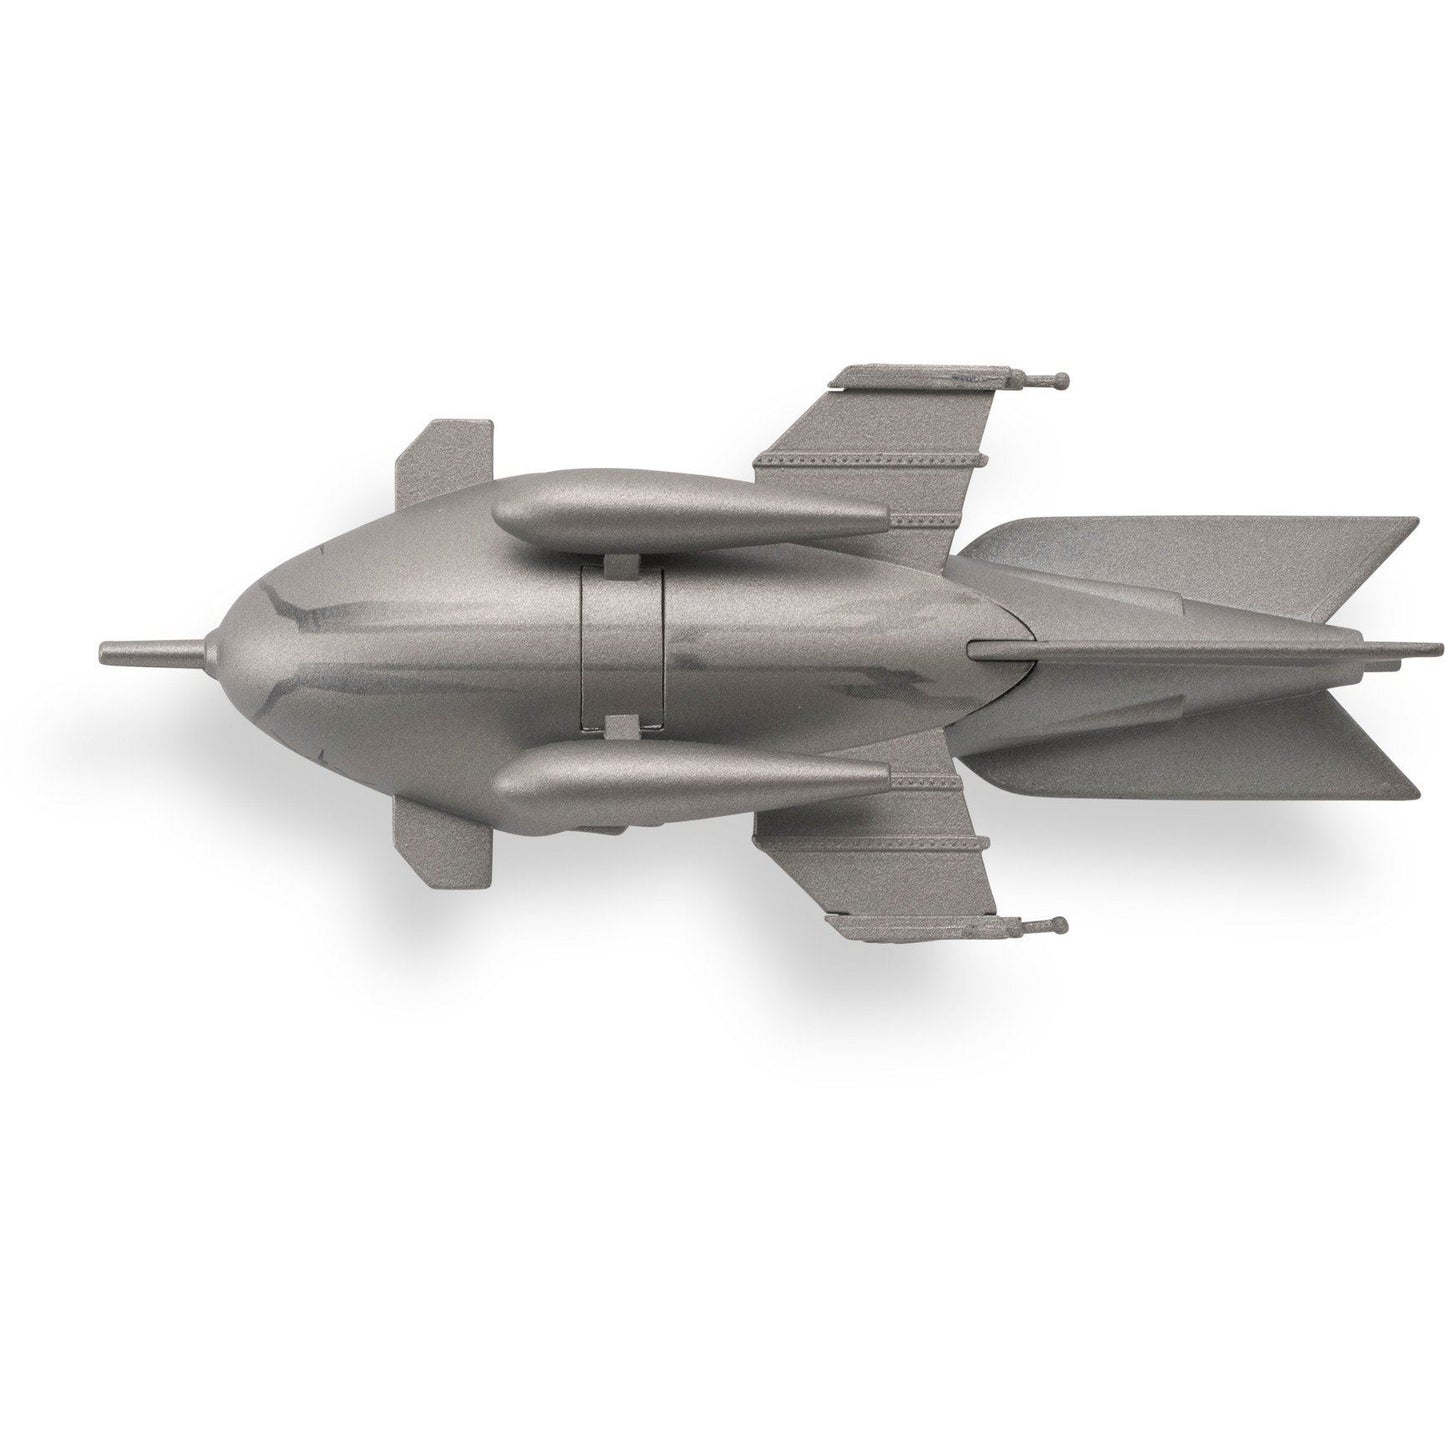 Eaglemoss #111 Captain Proton's Rocket Ship Model Die Cast Ship Star Trek